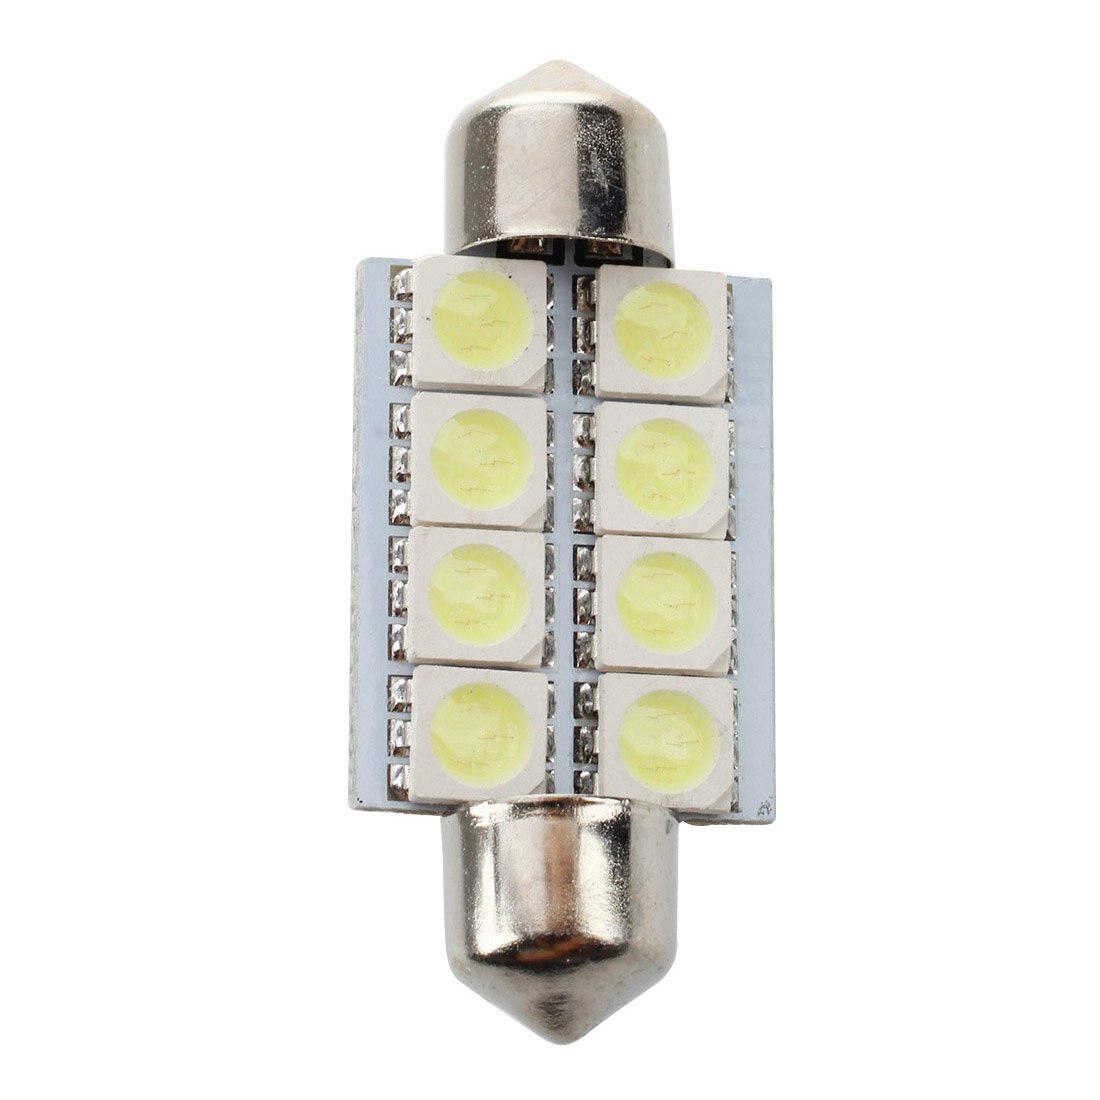 38mm Wit 8 LED 5050 SMD Festoen Lamp 4 stuks voor Auto Dome Lamp